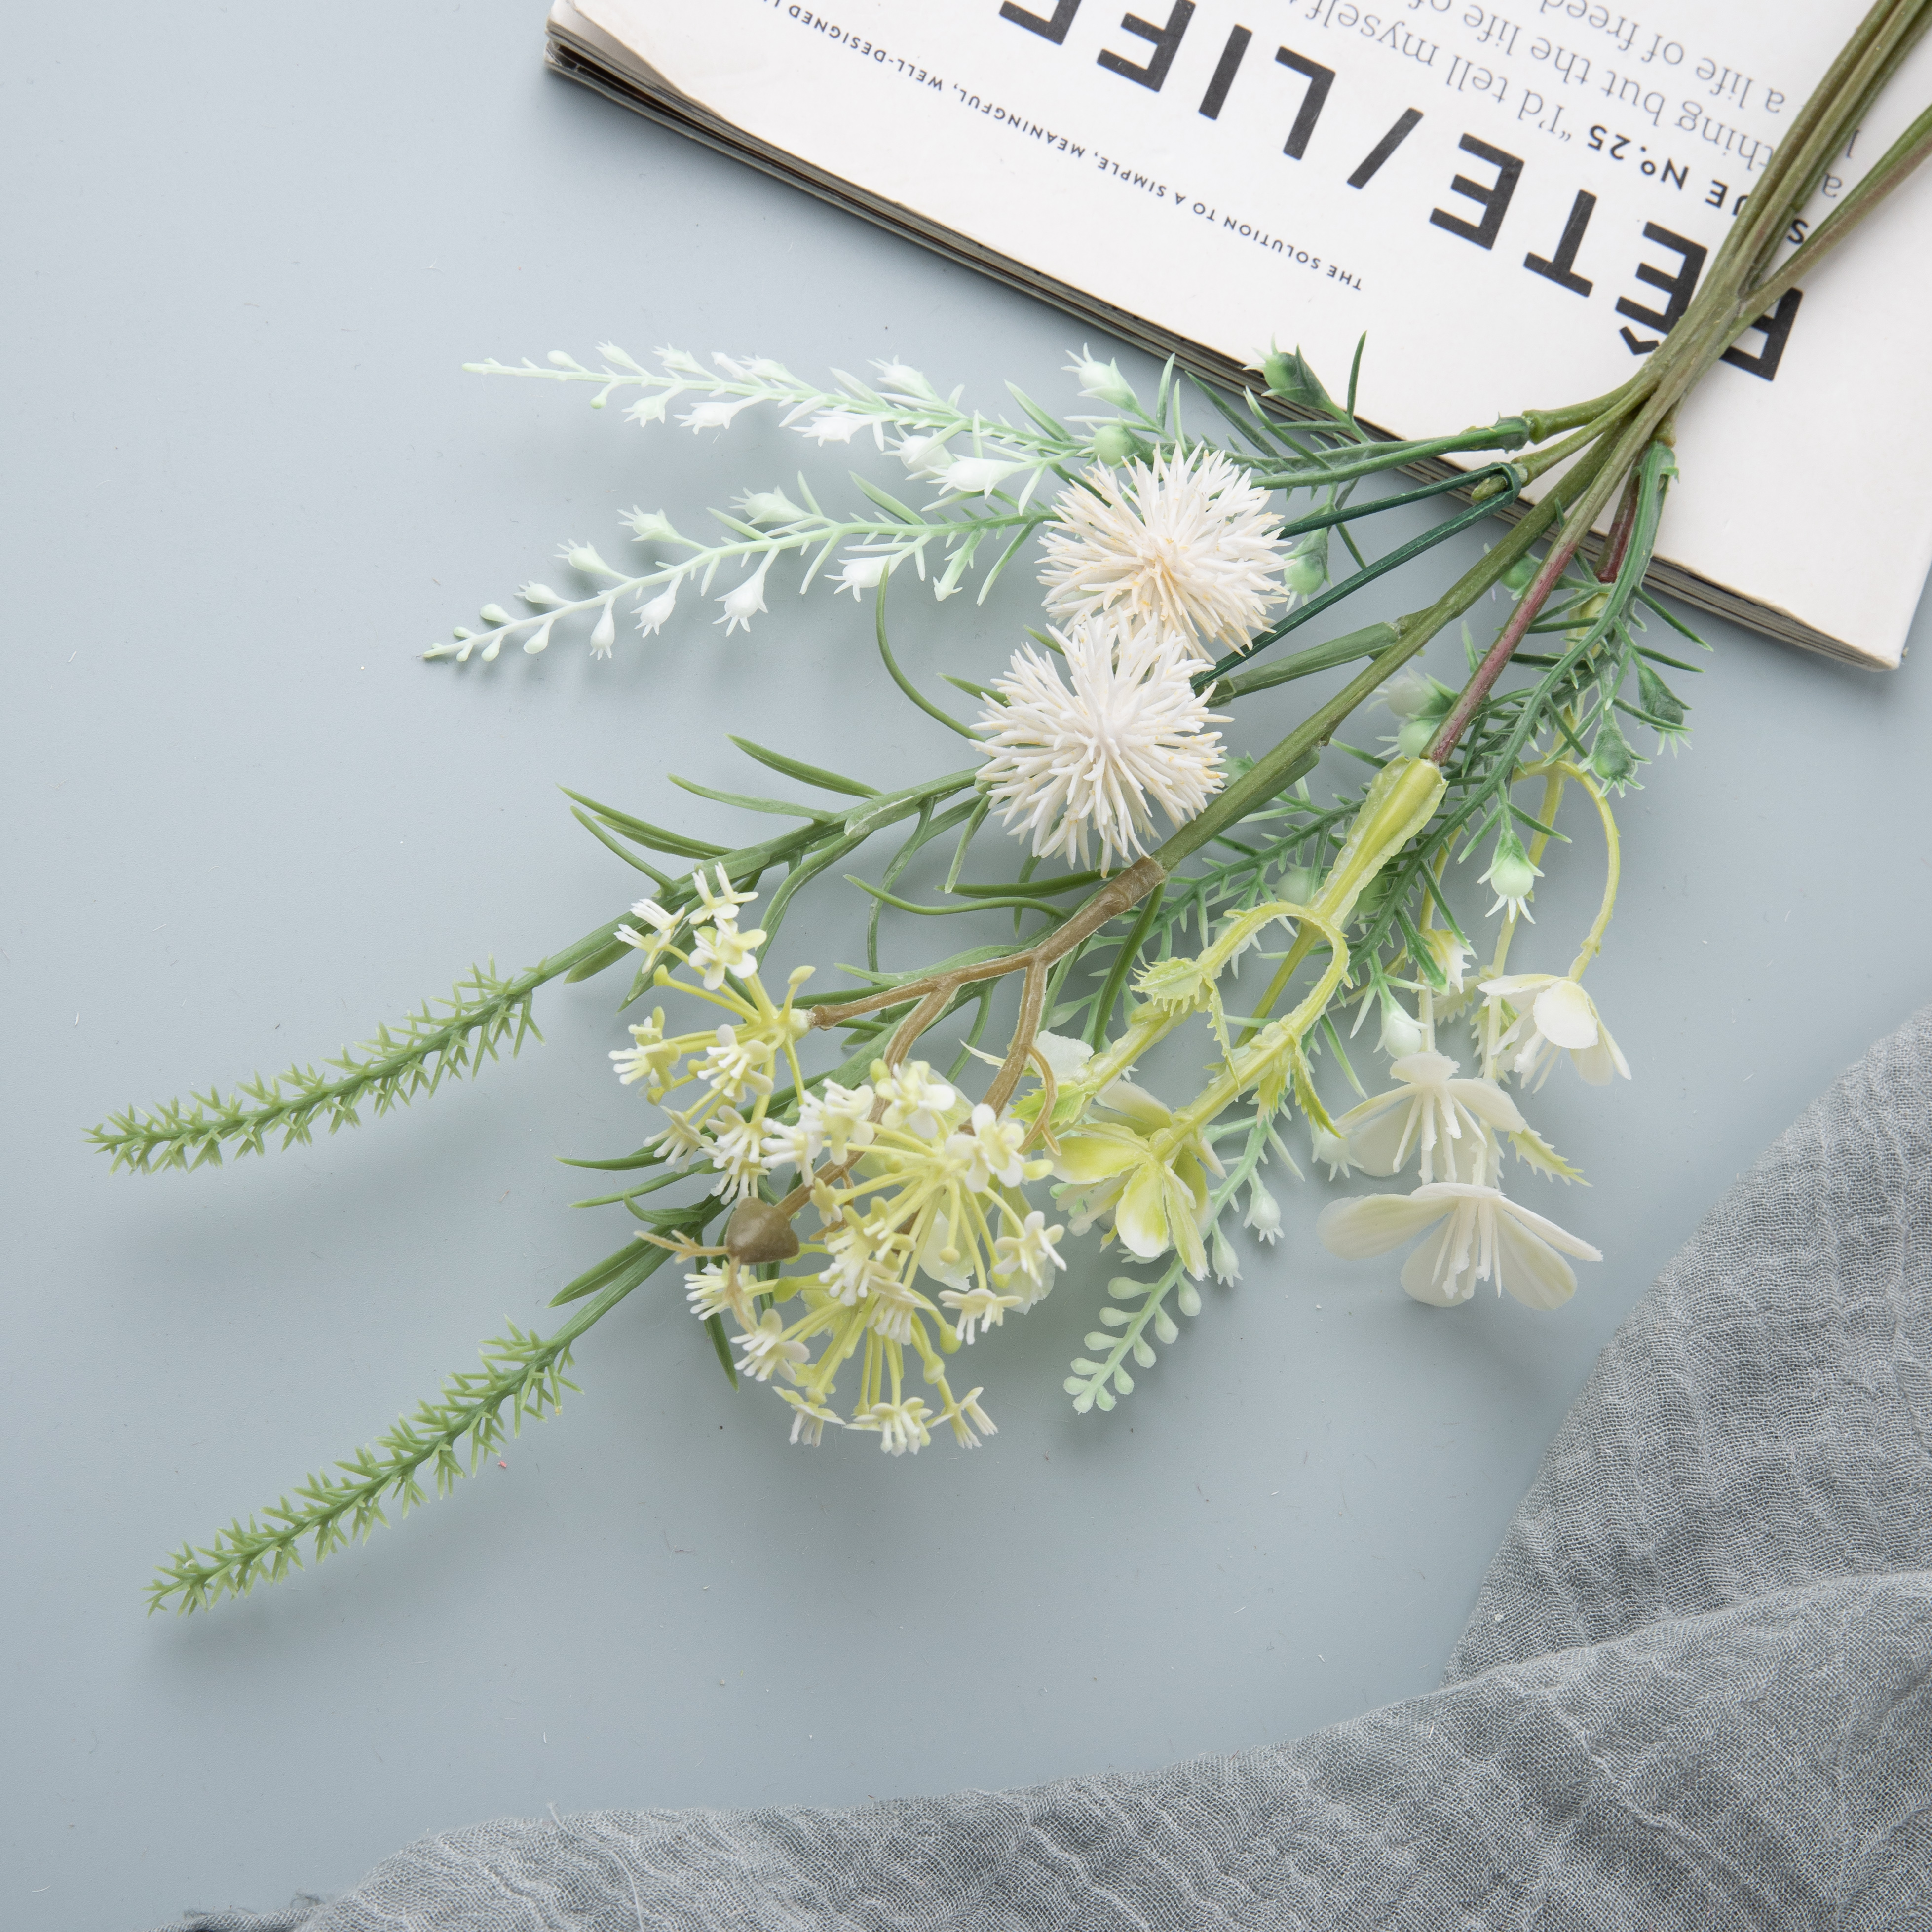 DY1-6051 Artificial Flower Bouquet Dandelion Popular Wedding Centerpieces